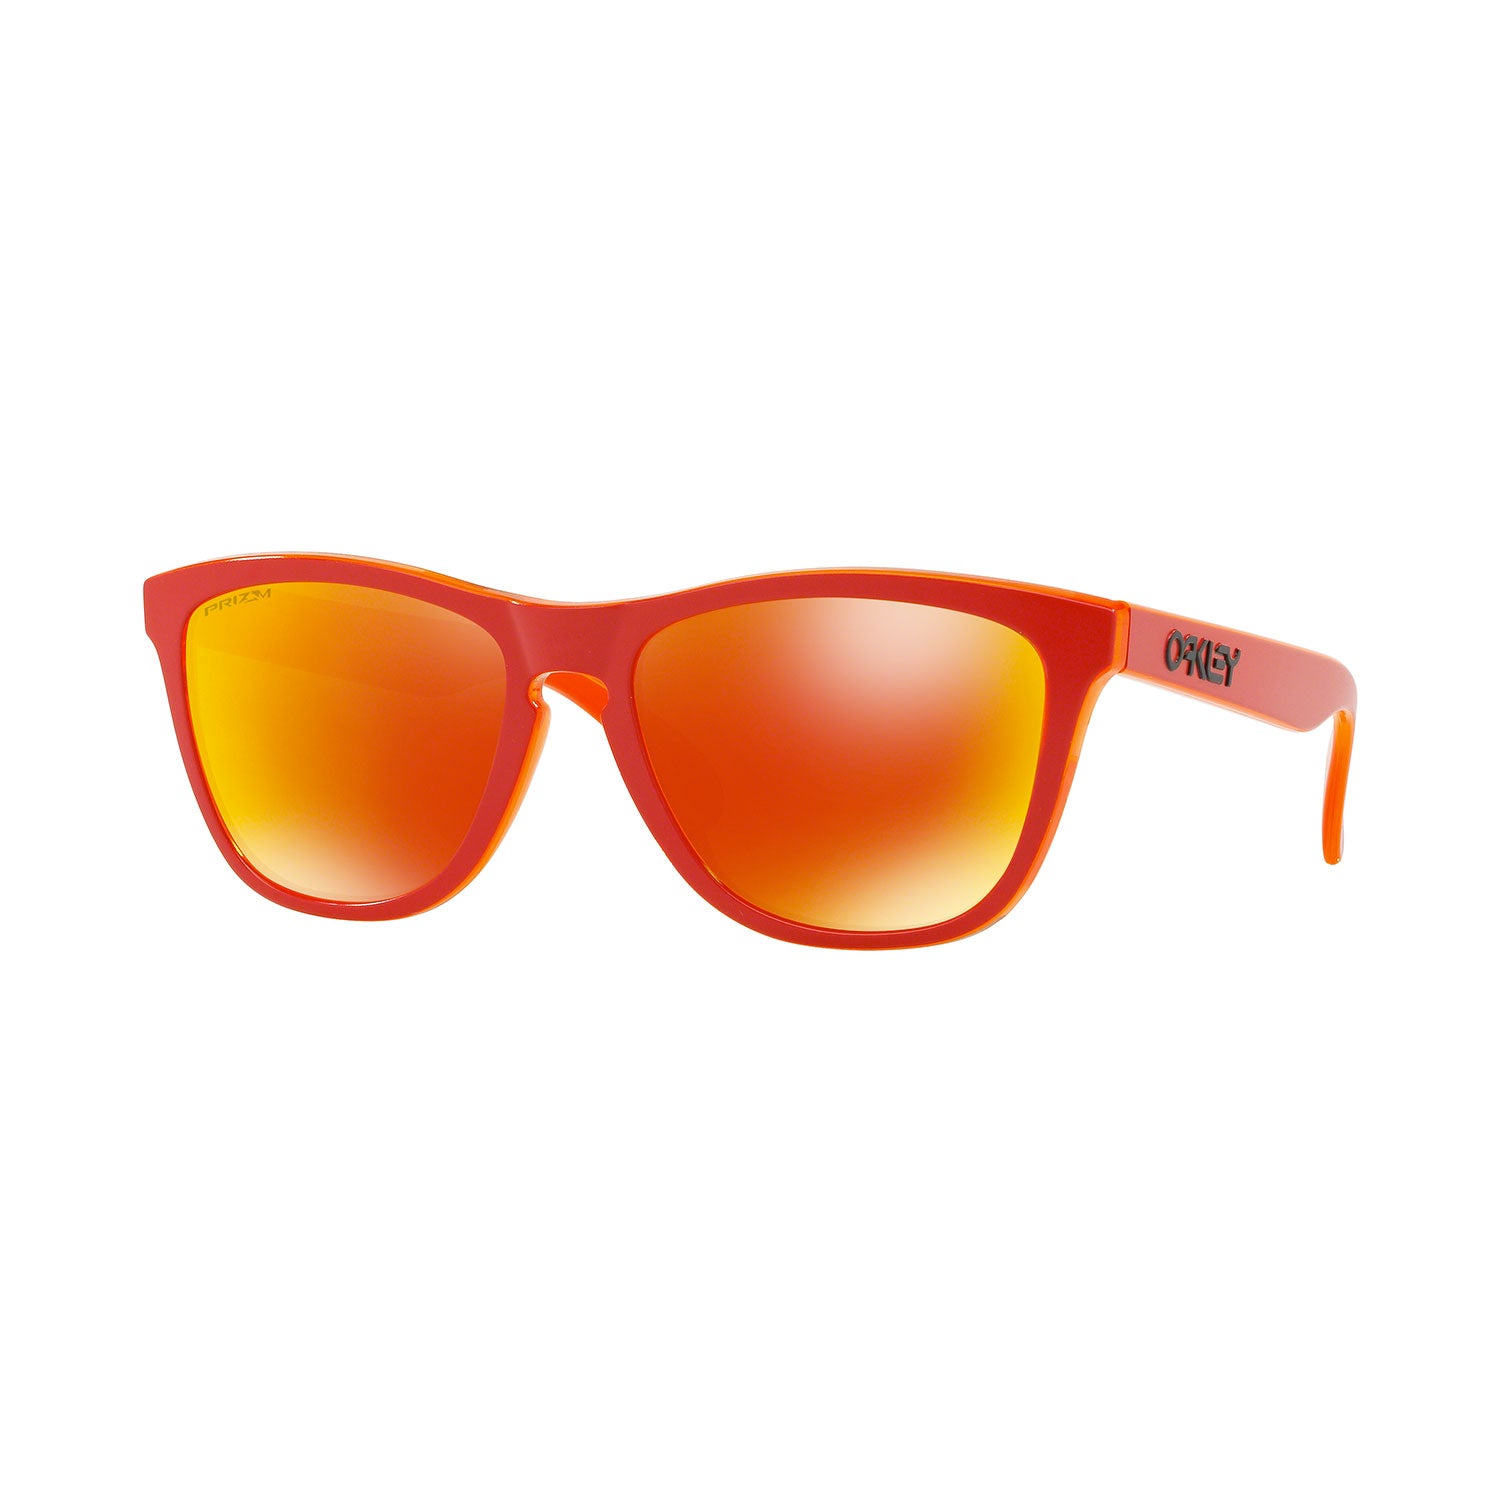 Oakley Frogskins Grips - Matte Red/Translucent Orange - Prizm Ruby